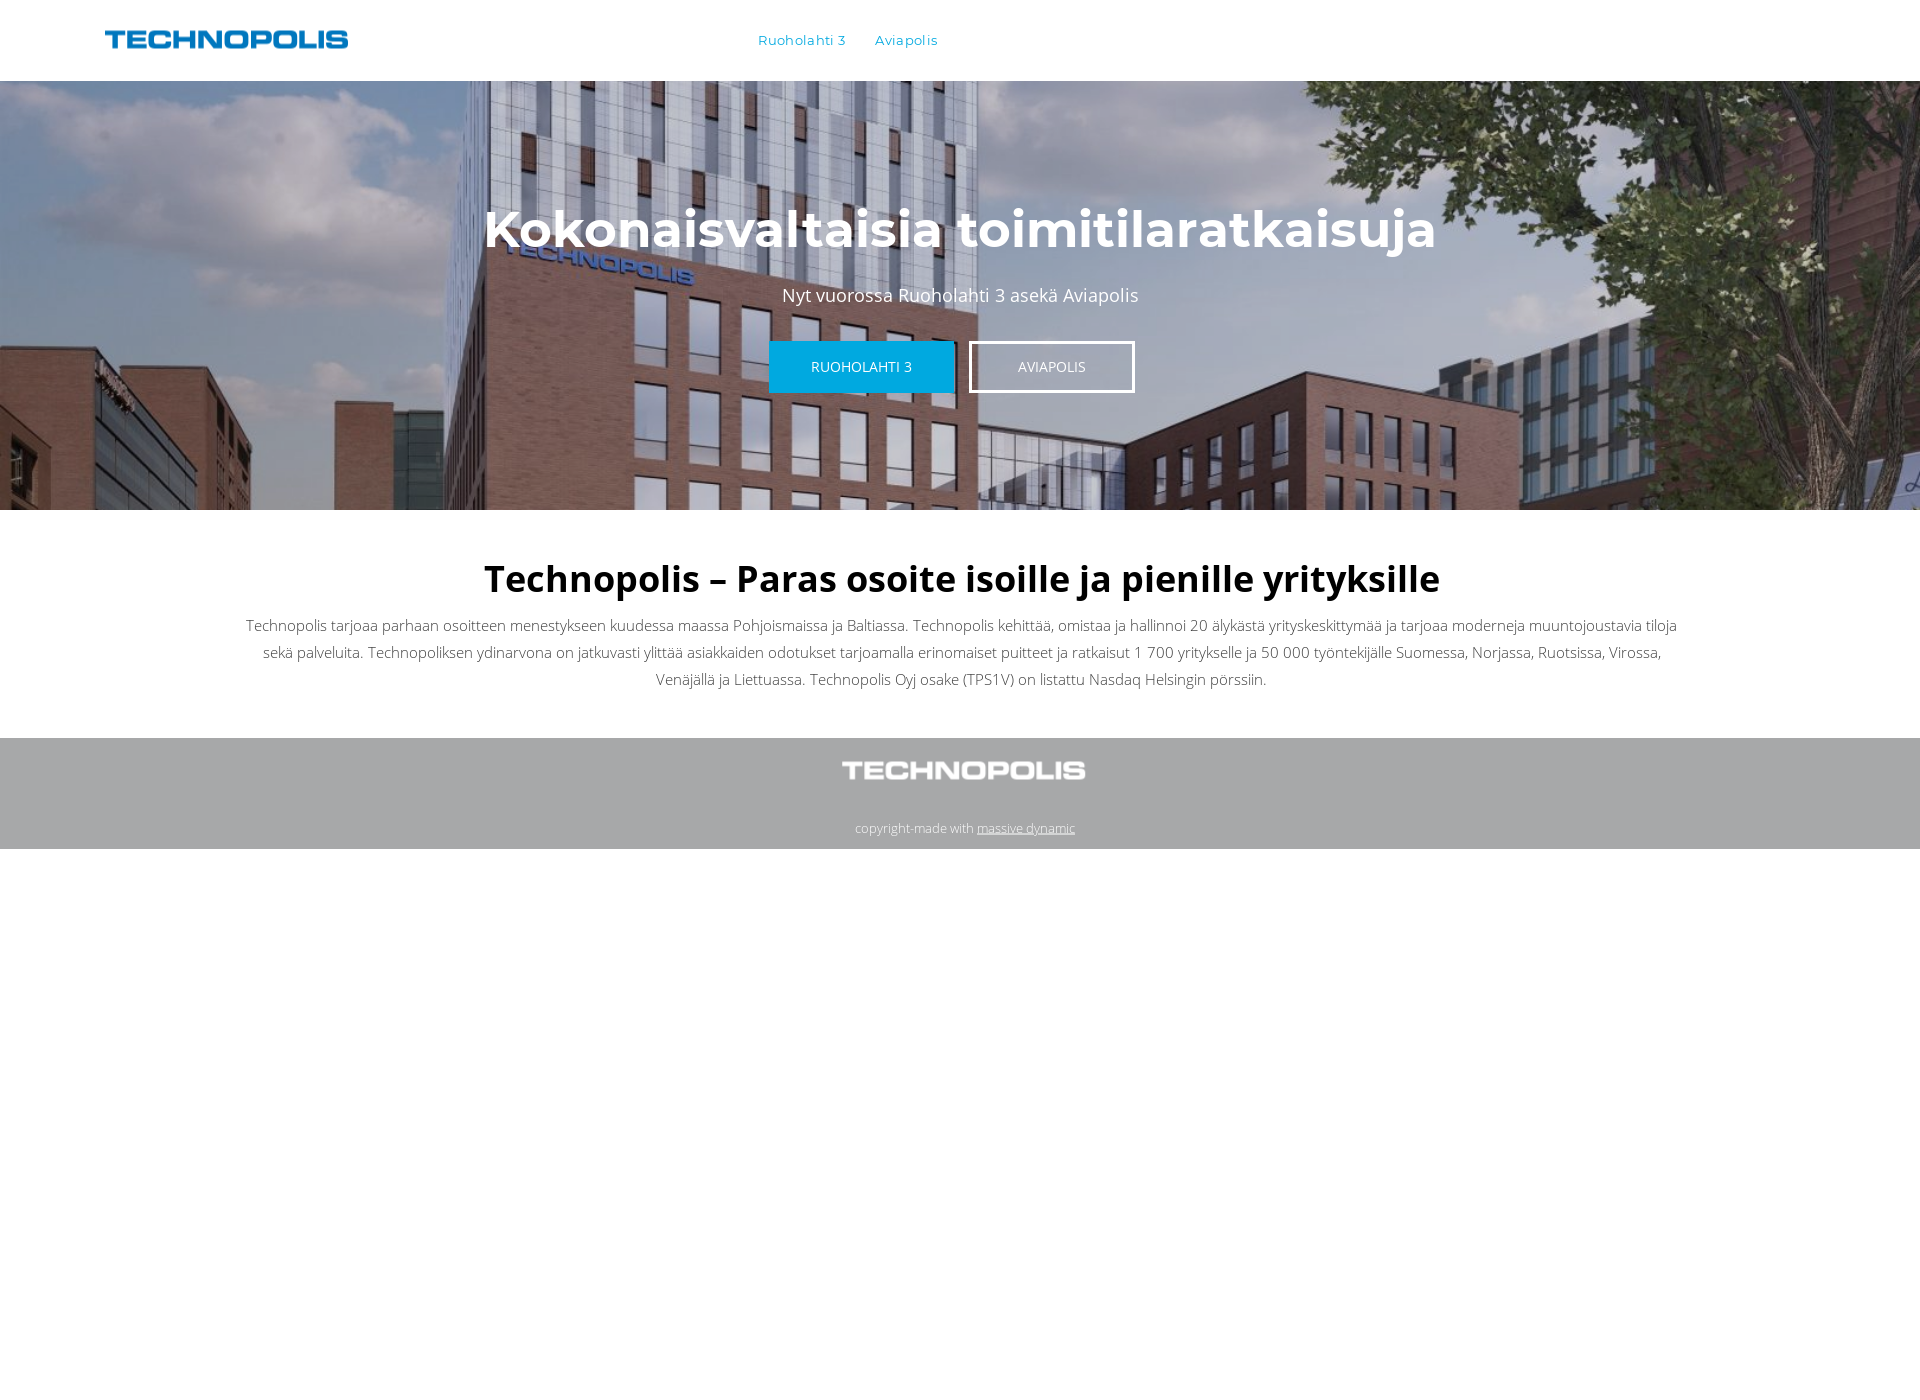 Näyttökuva technopoliskampanjat.fi